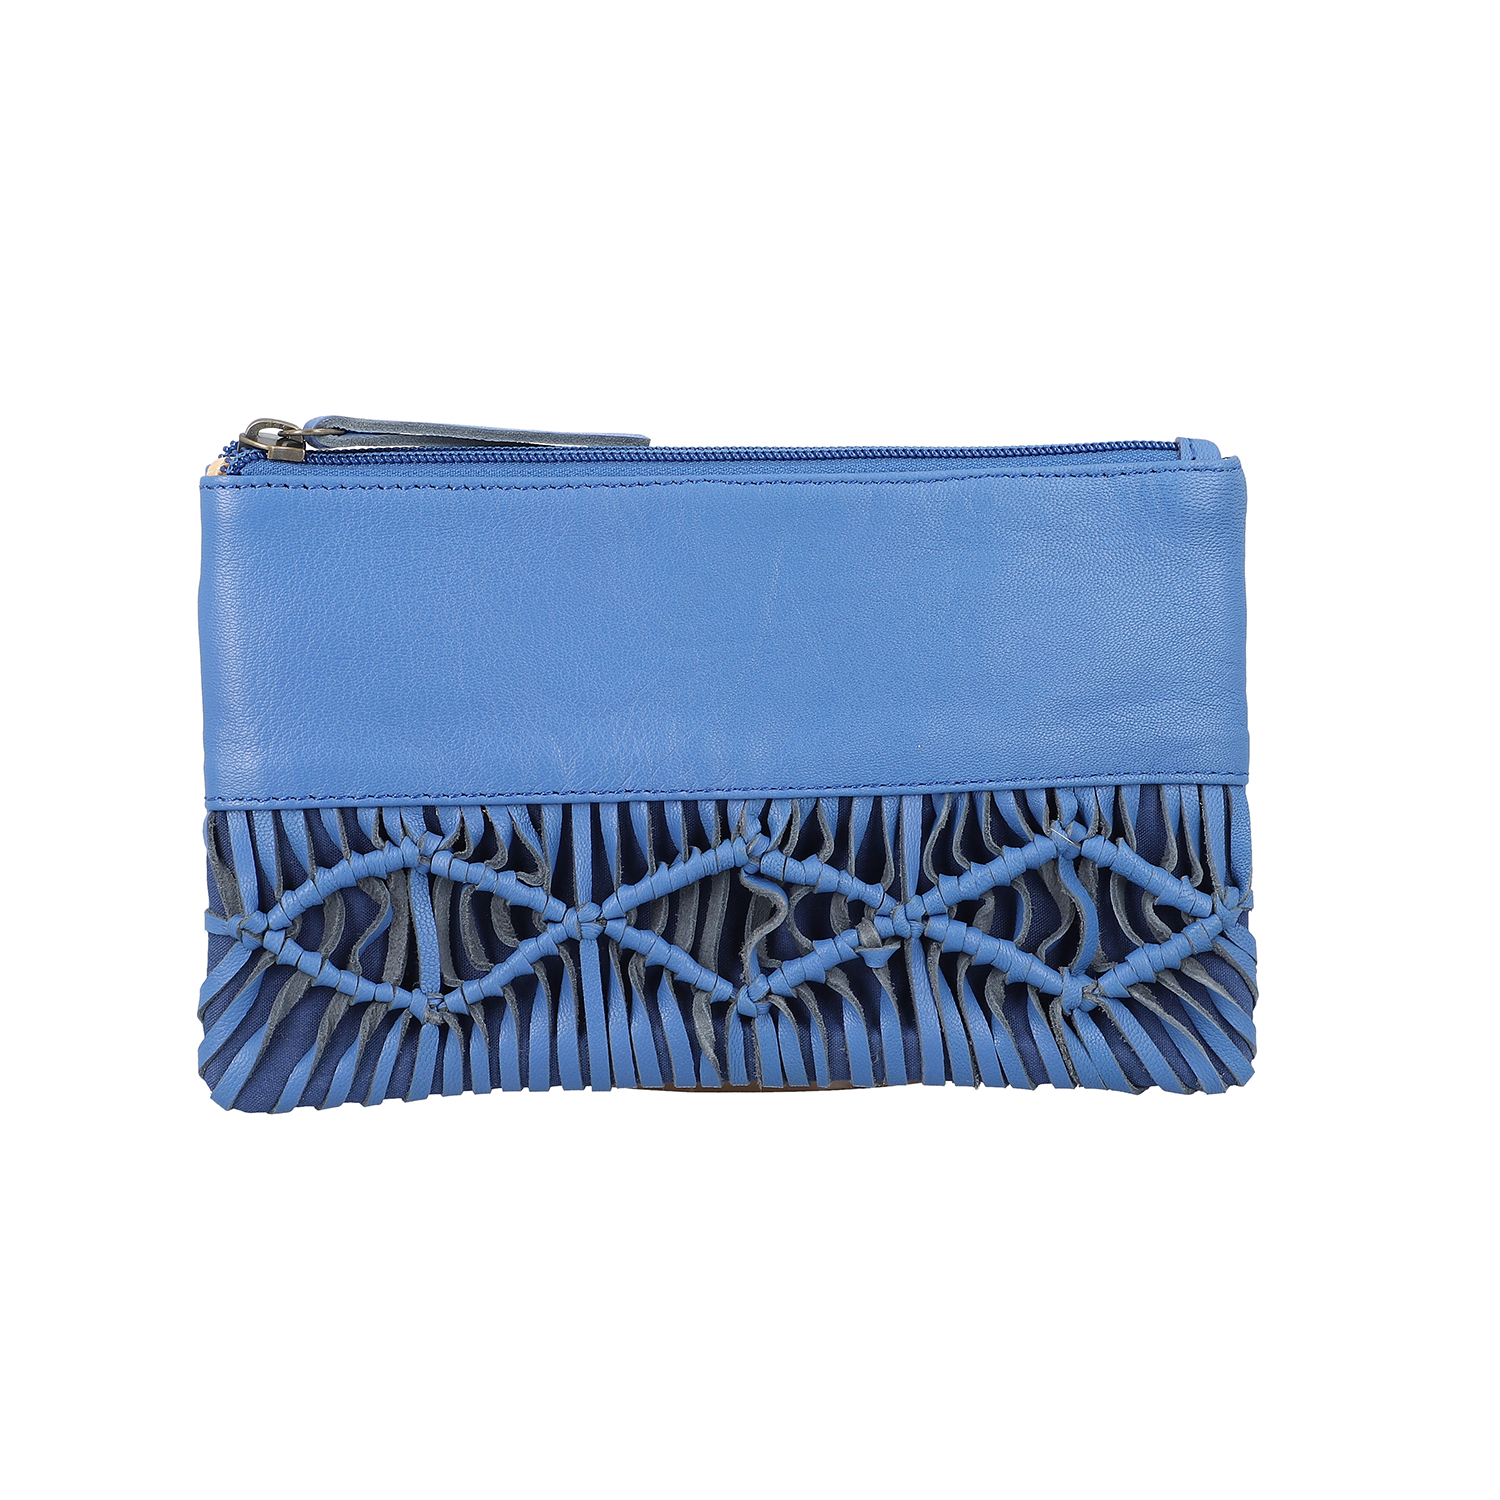 100% Genuine Leather Macrame Wallet (Size 21x13cm) -  Blue